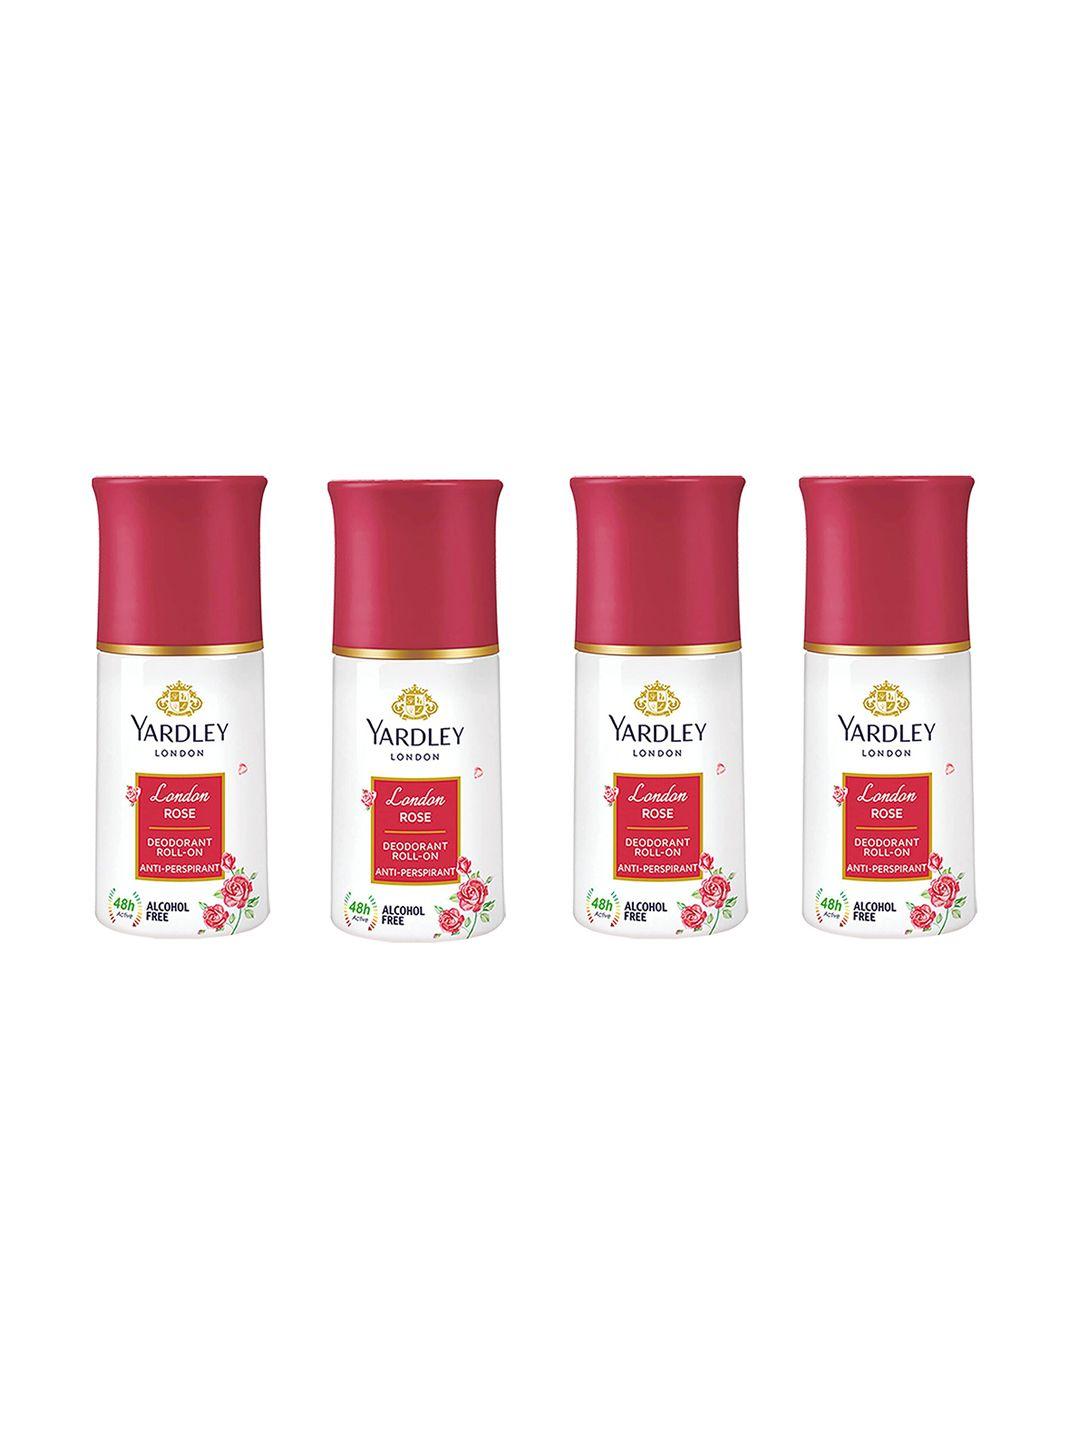 yardley london women set of 4 anti-perspirant london rose deodorant roll-ons - 50ml each